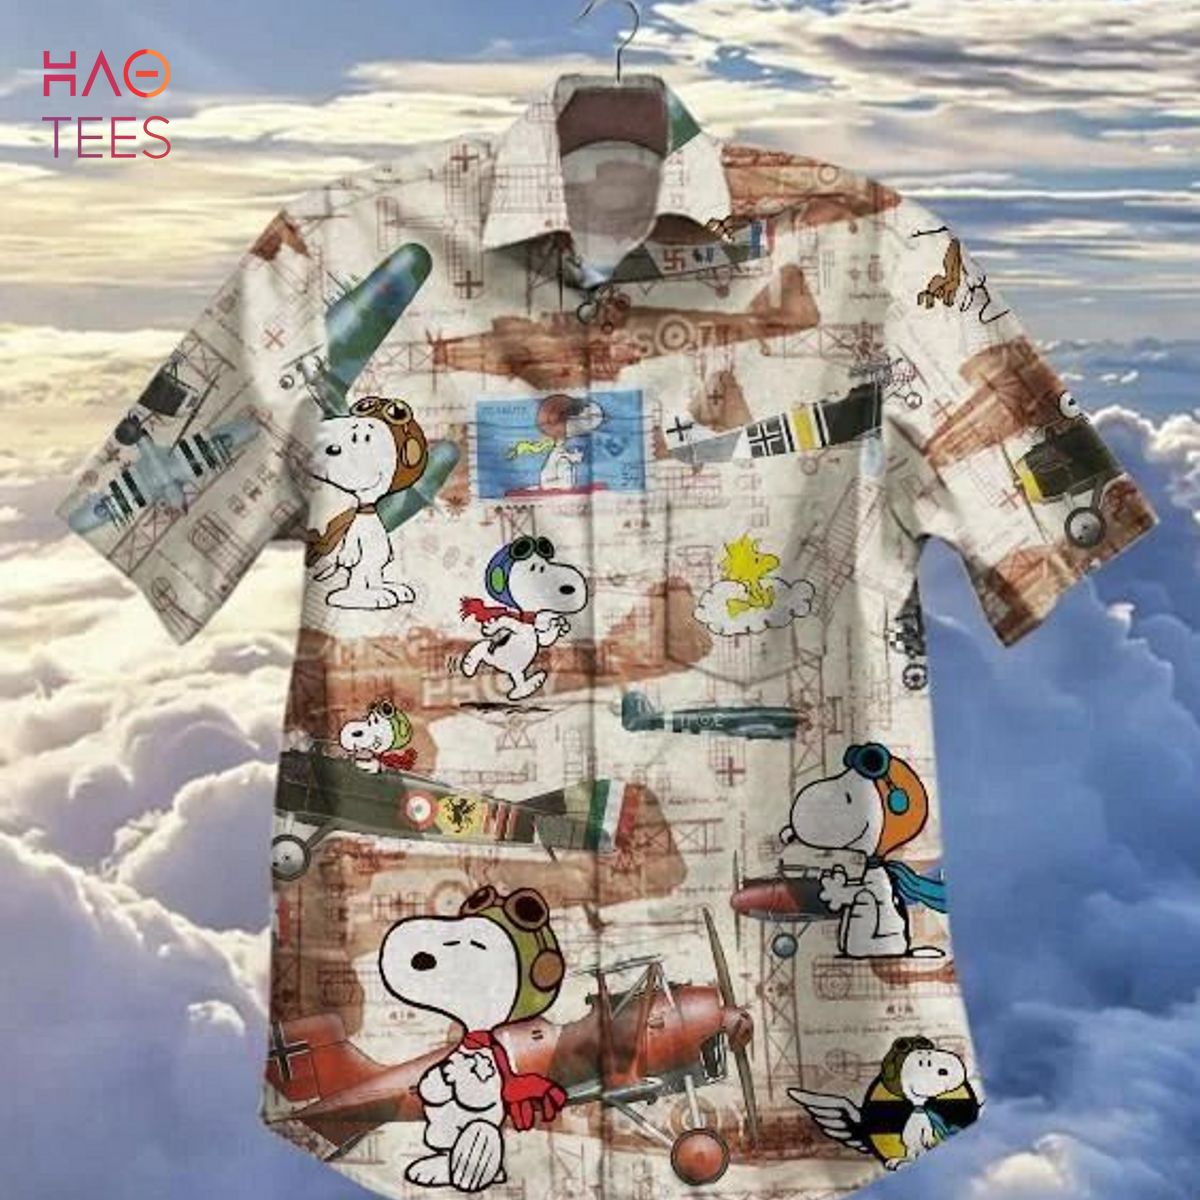 Hot Plane And Snoopy Vintage Hawaiian Shirt